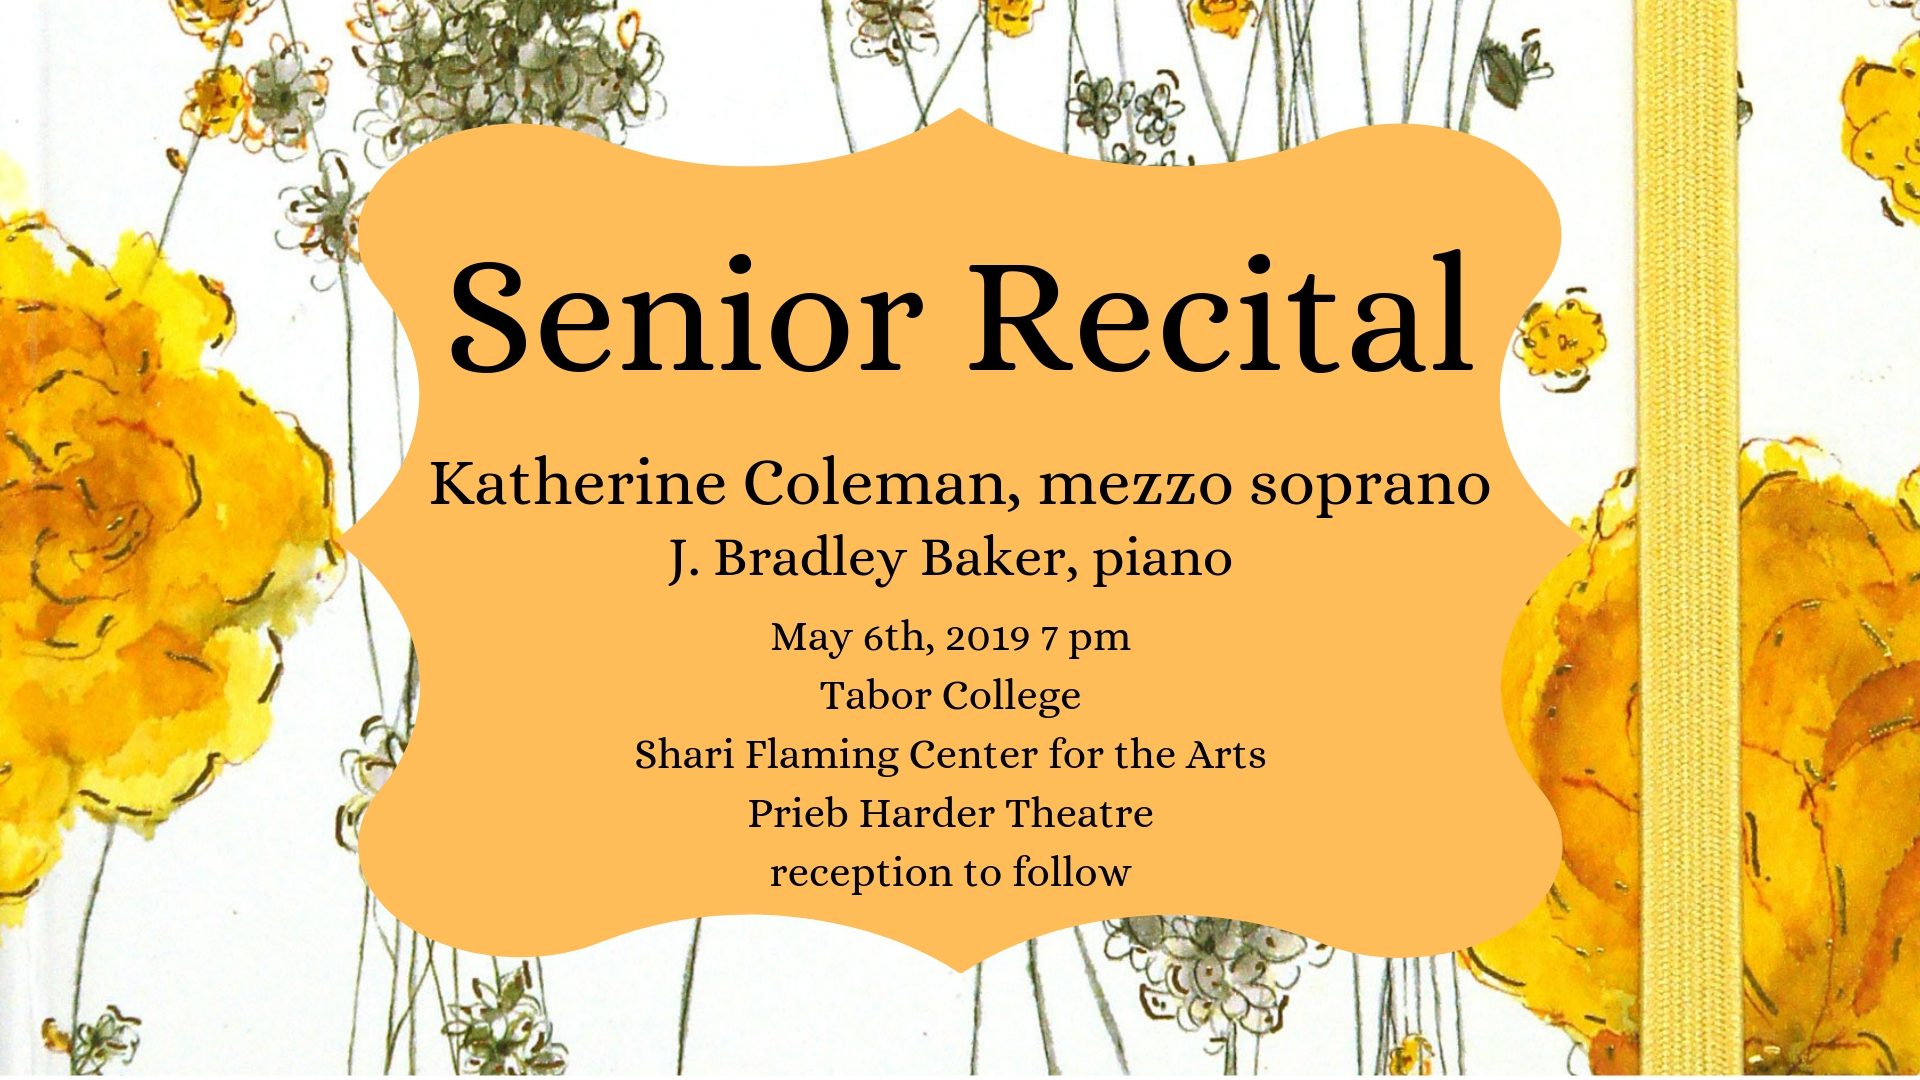 Senior Recital concert poster